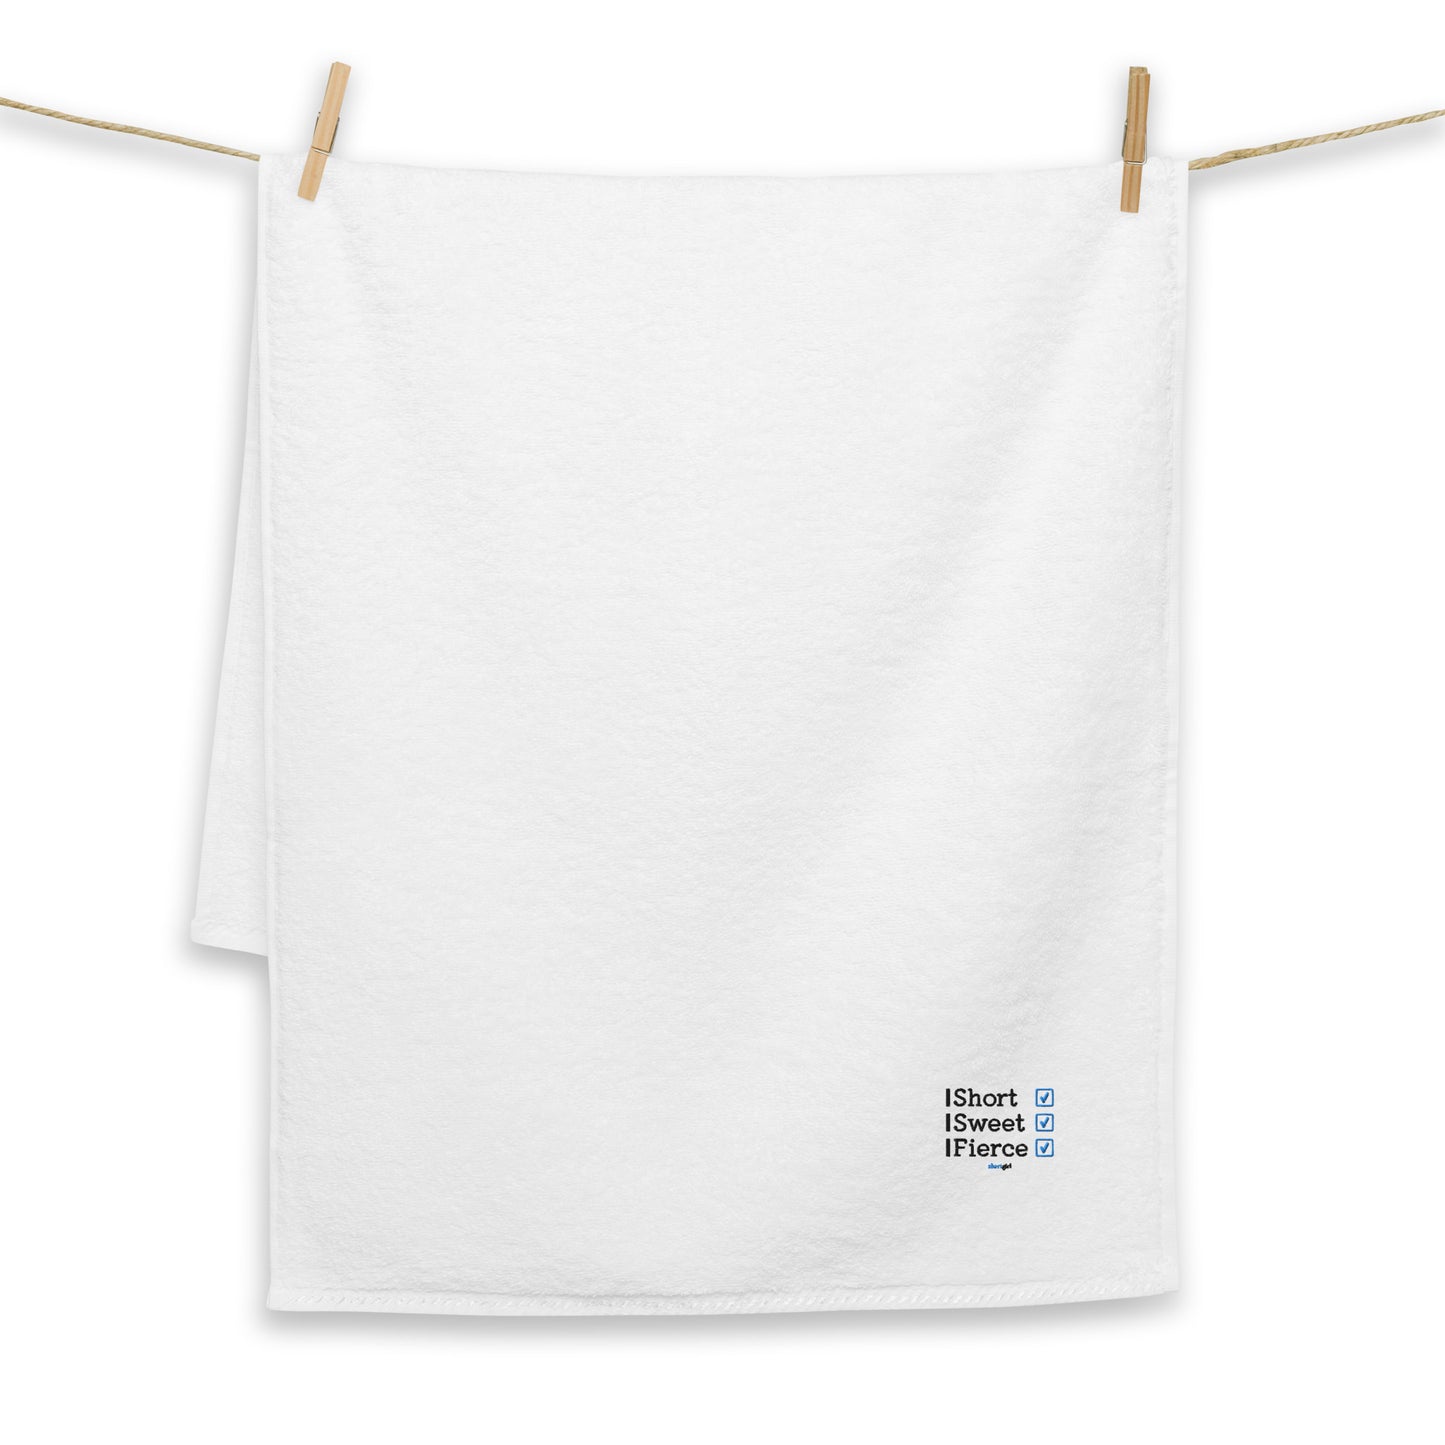 Turkish cotton towel - Short, Sweet, Fierce